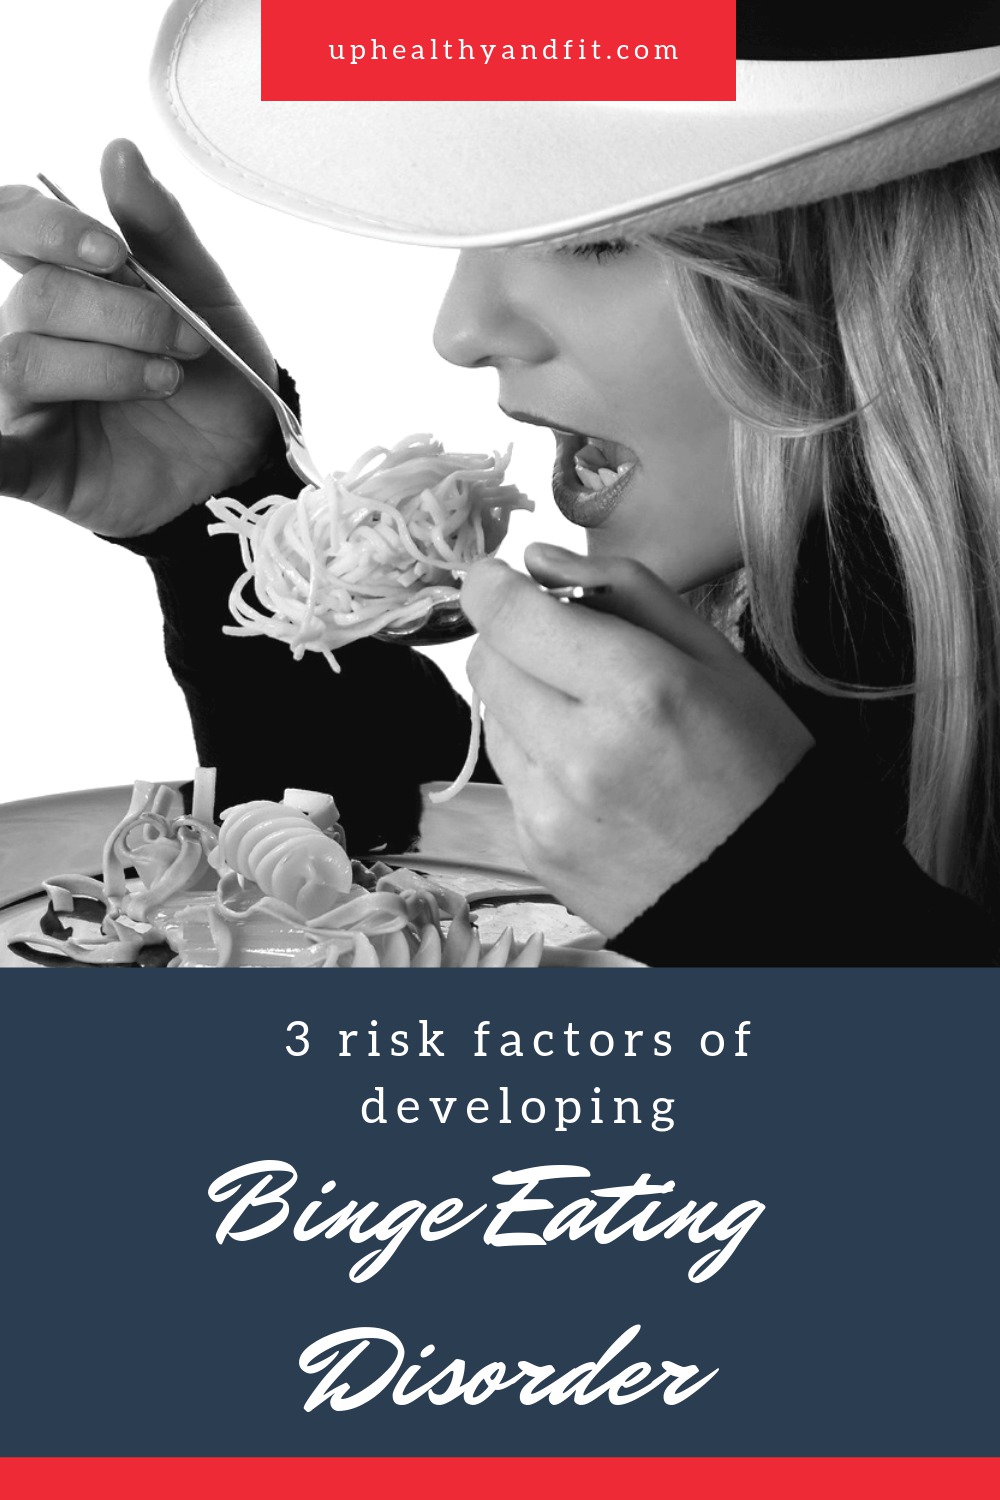 binge eating disorder risk factors symptoms causes